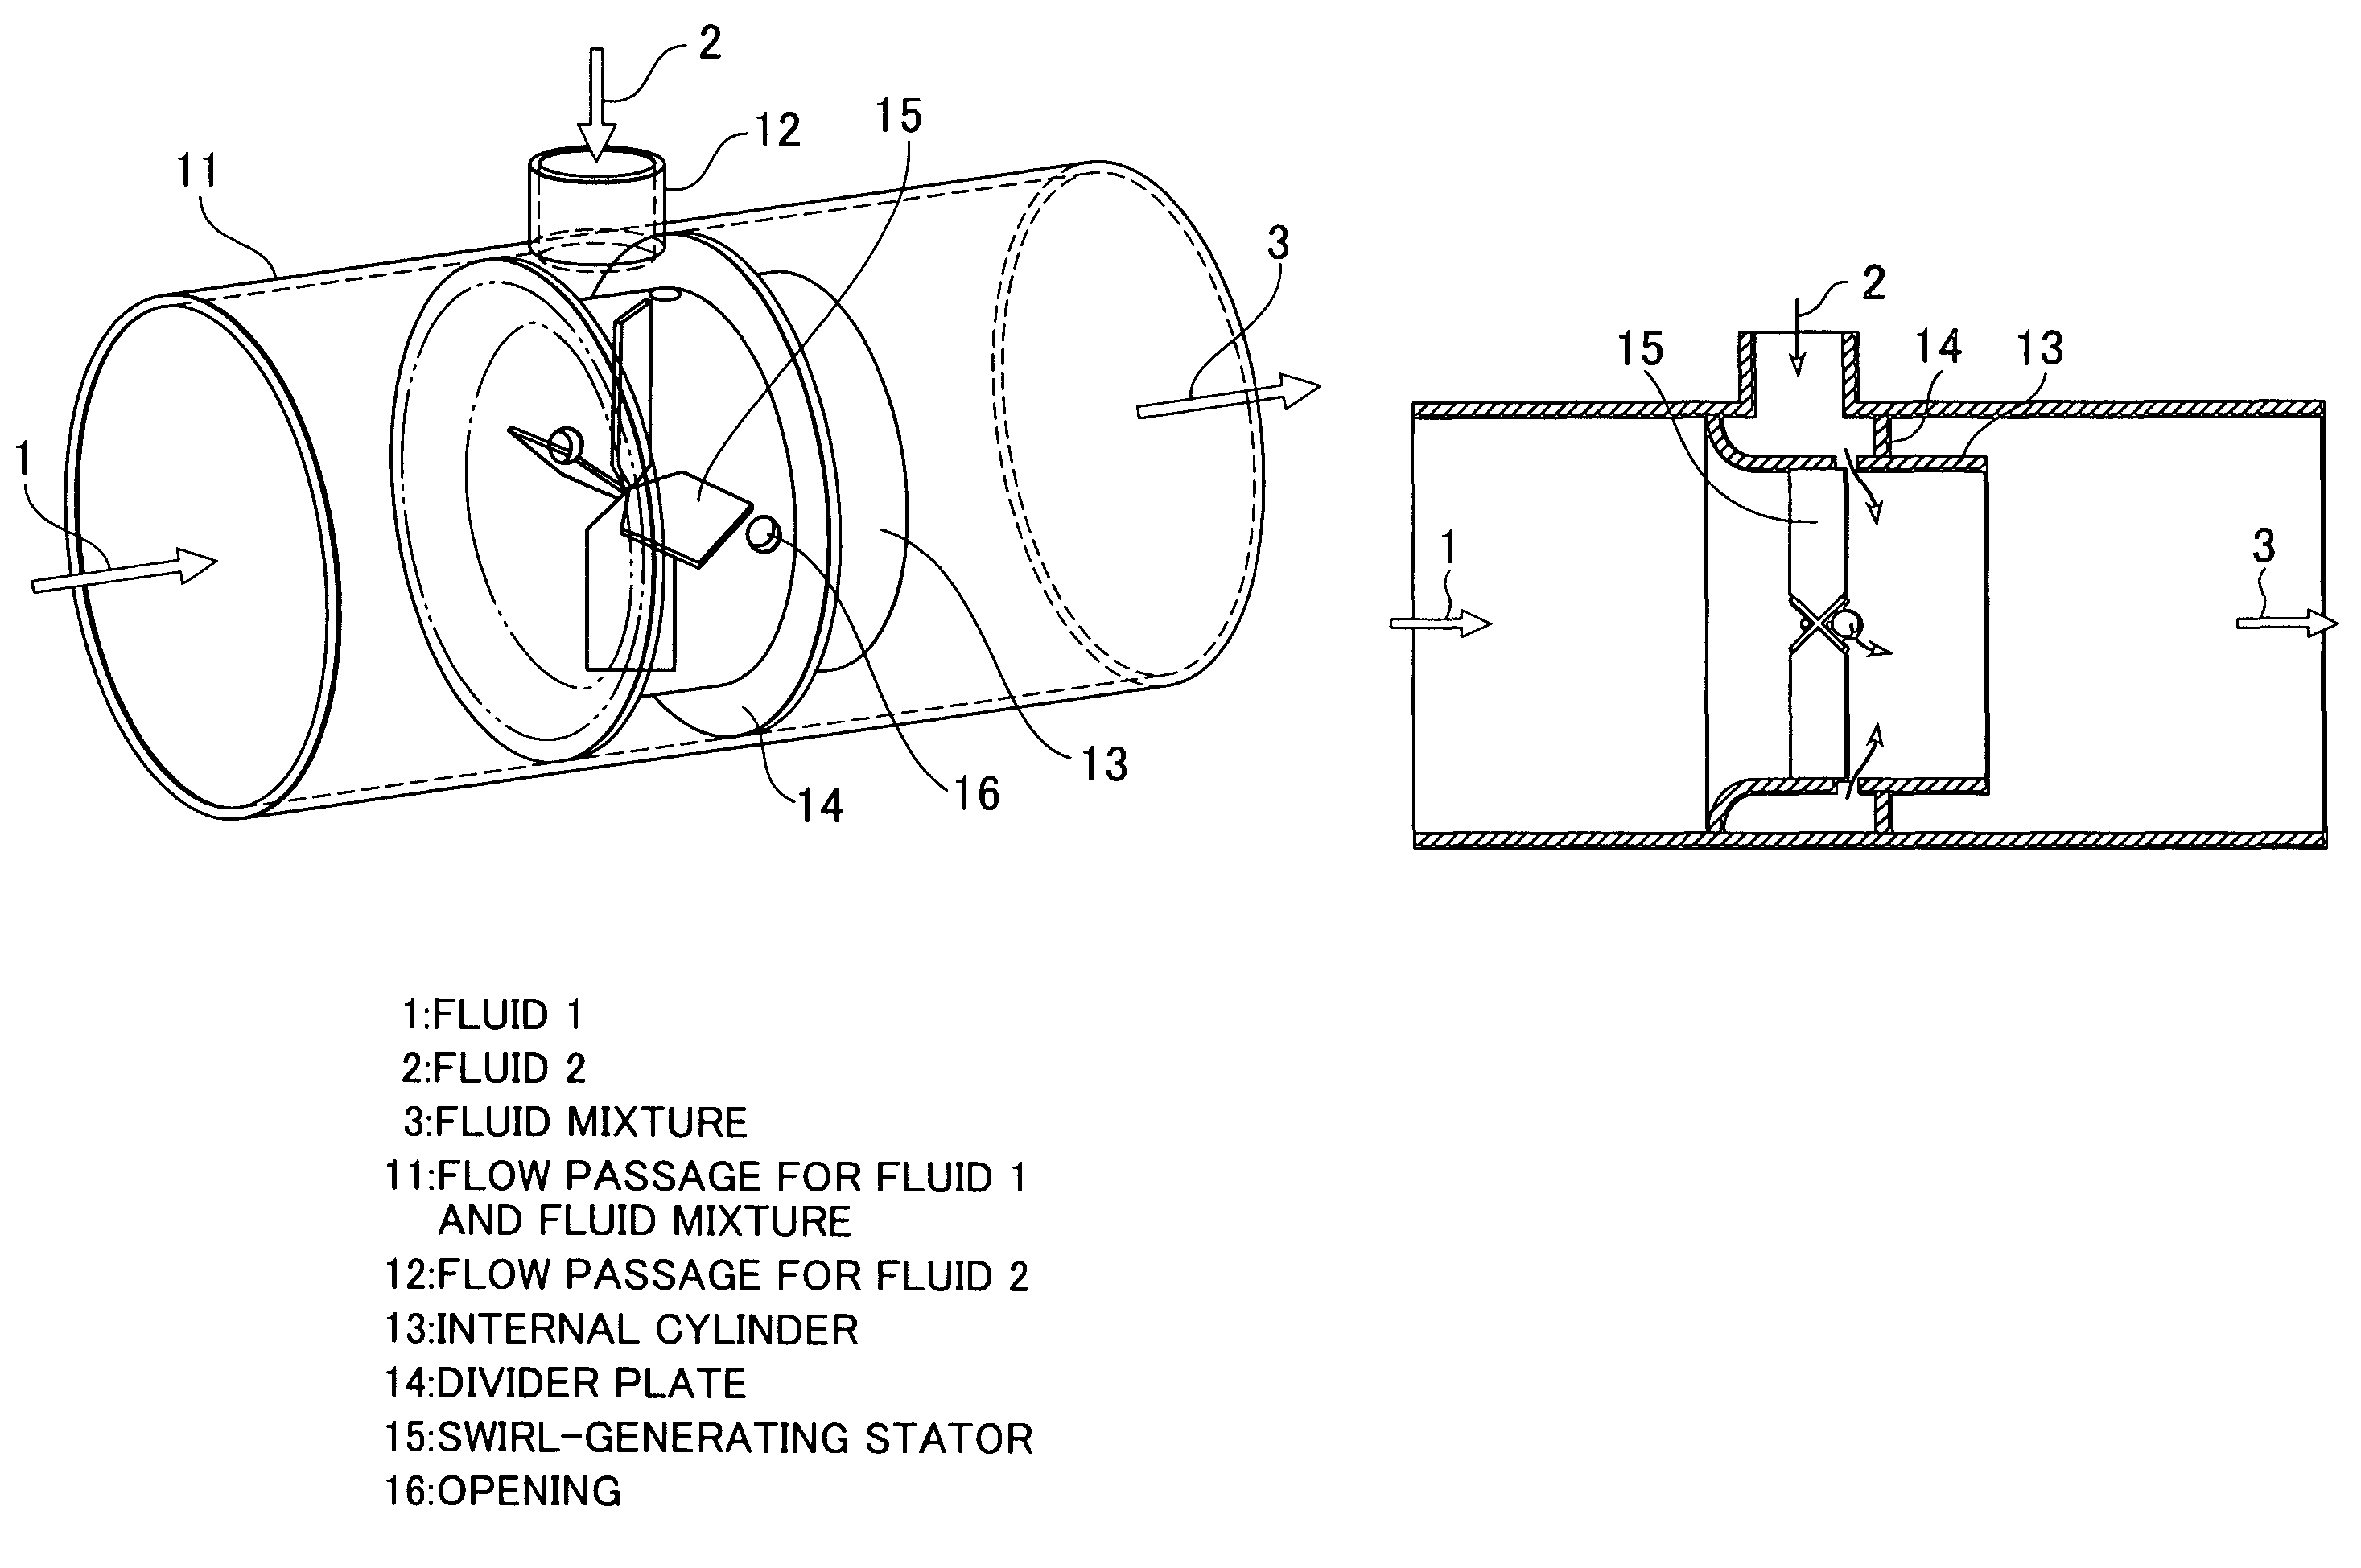 Fluid mixing apparatus